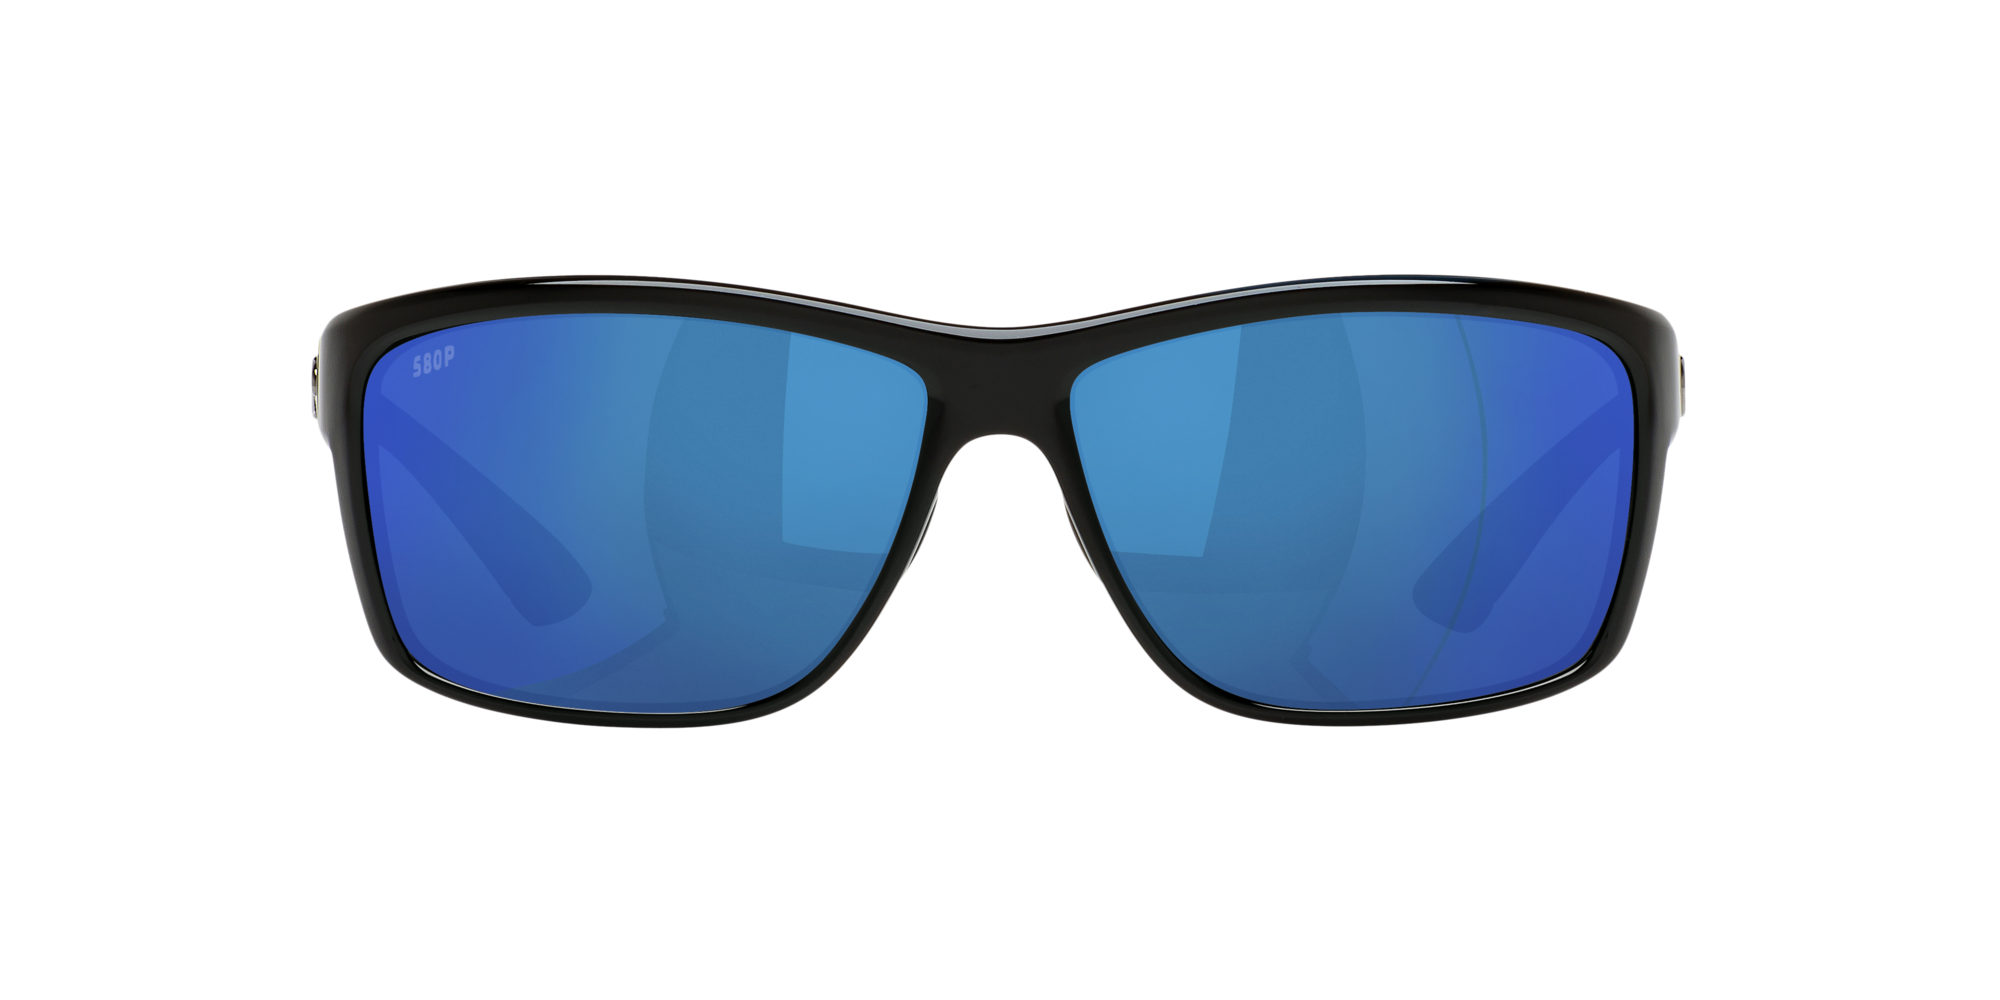 Costa Del Mar Mag bay AA Tortoise Sunglasses Costa Del Mar Mag Bay Sunglasses Blue Mirror 580P Lens Pro-Motion Distributing Direct AA10OBMP